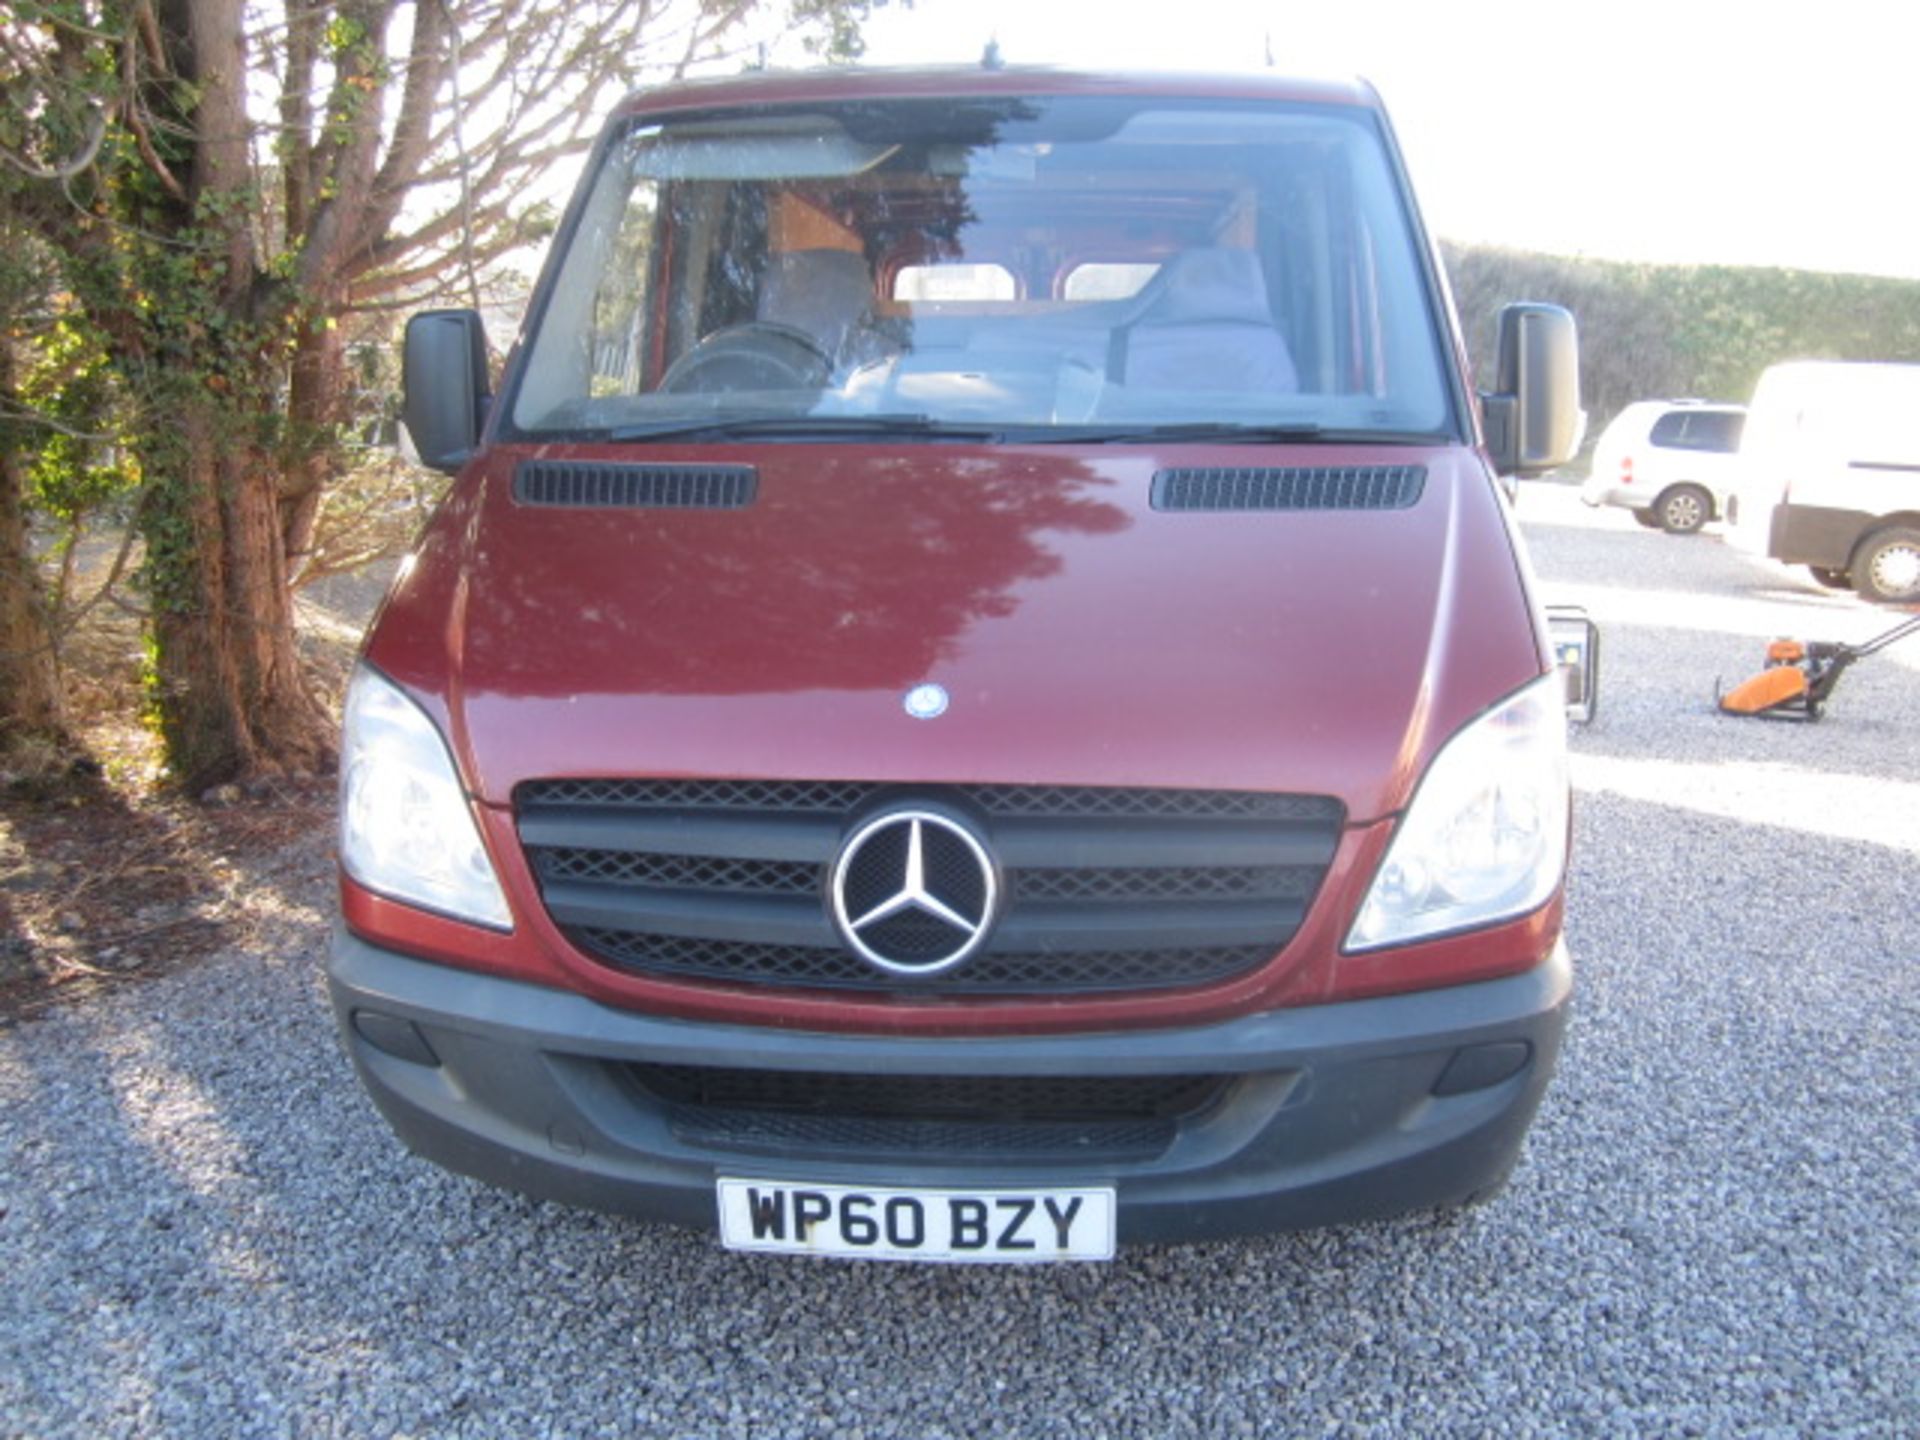 Mercedes Sprinter 216 CDI 2.1 diesel panel van. Registration: WP60 BZY. Recorded mileage: 85,500. - Image 3 of 10